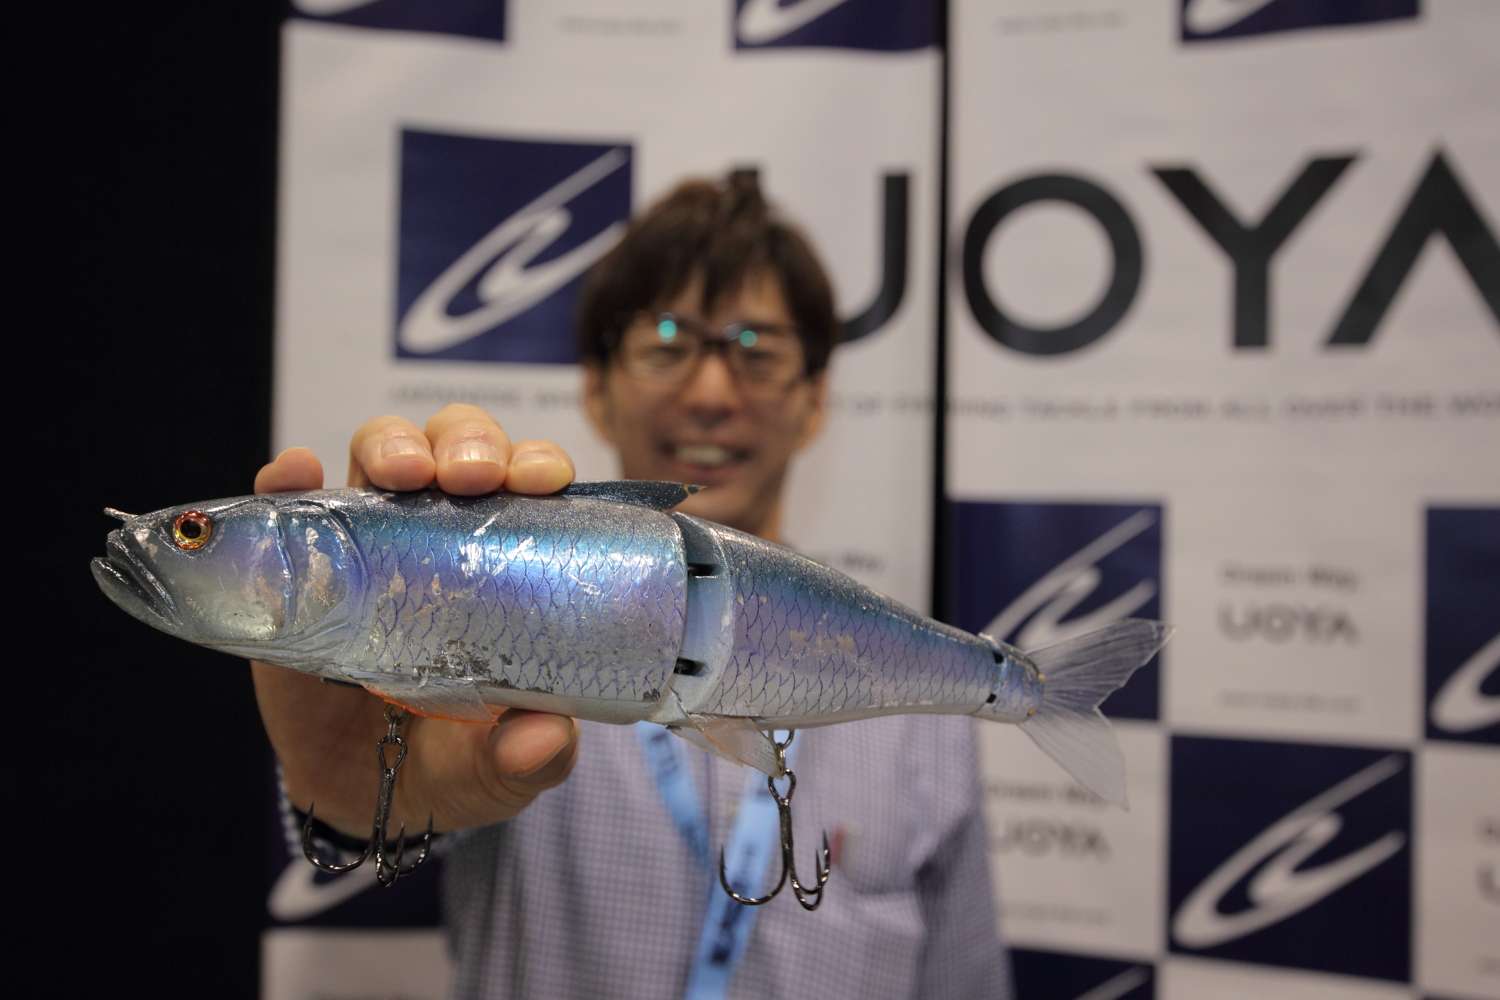 Speaking of giant swim baits, Uoya Internationalâs Yusuke Hashizume has one.
